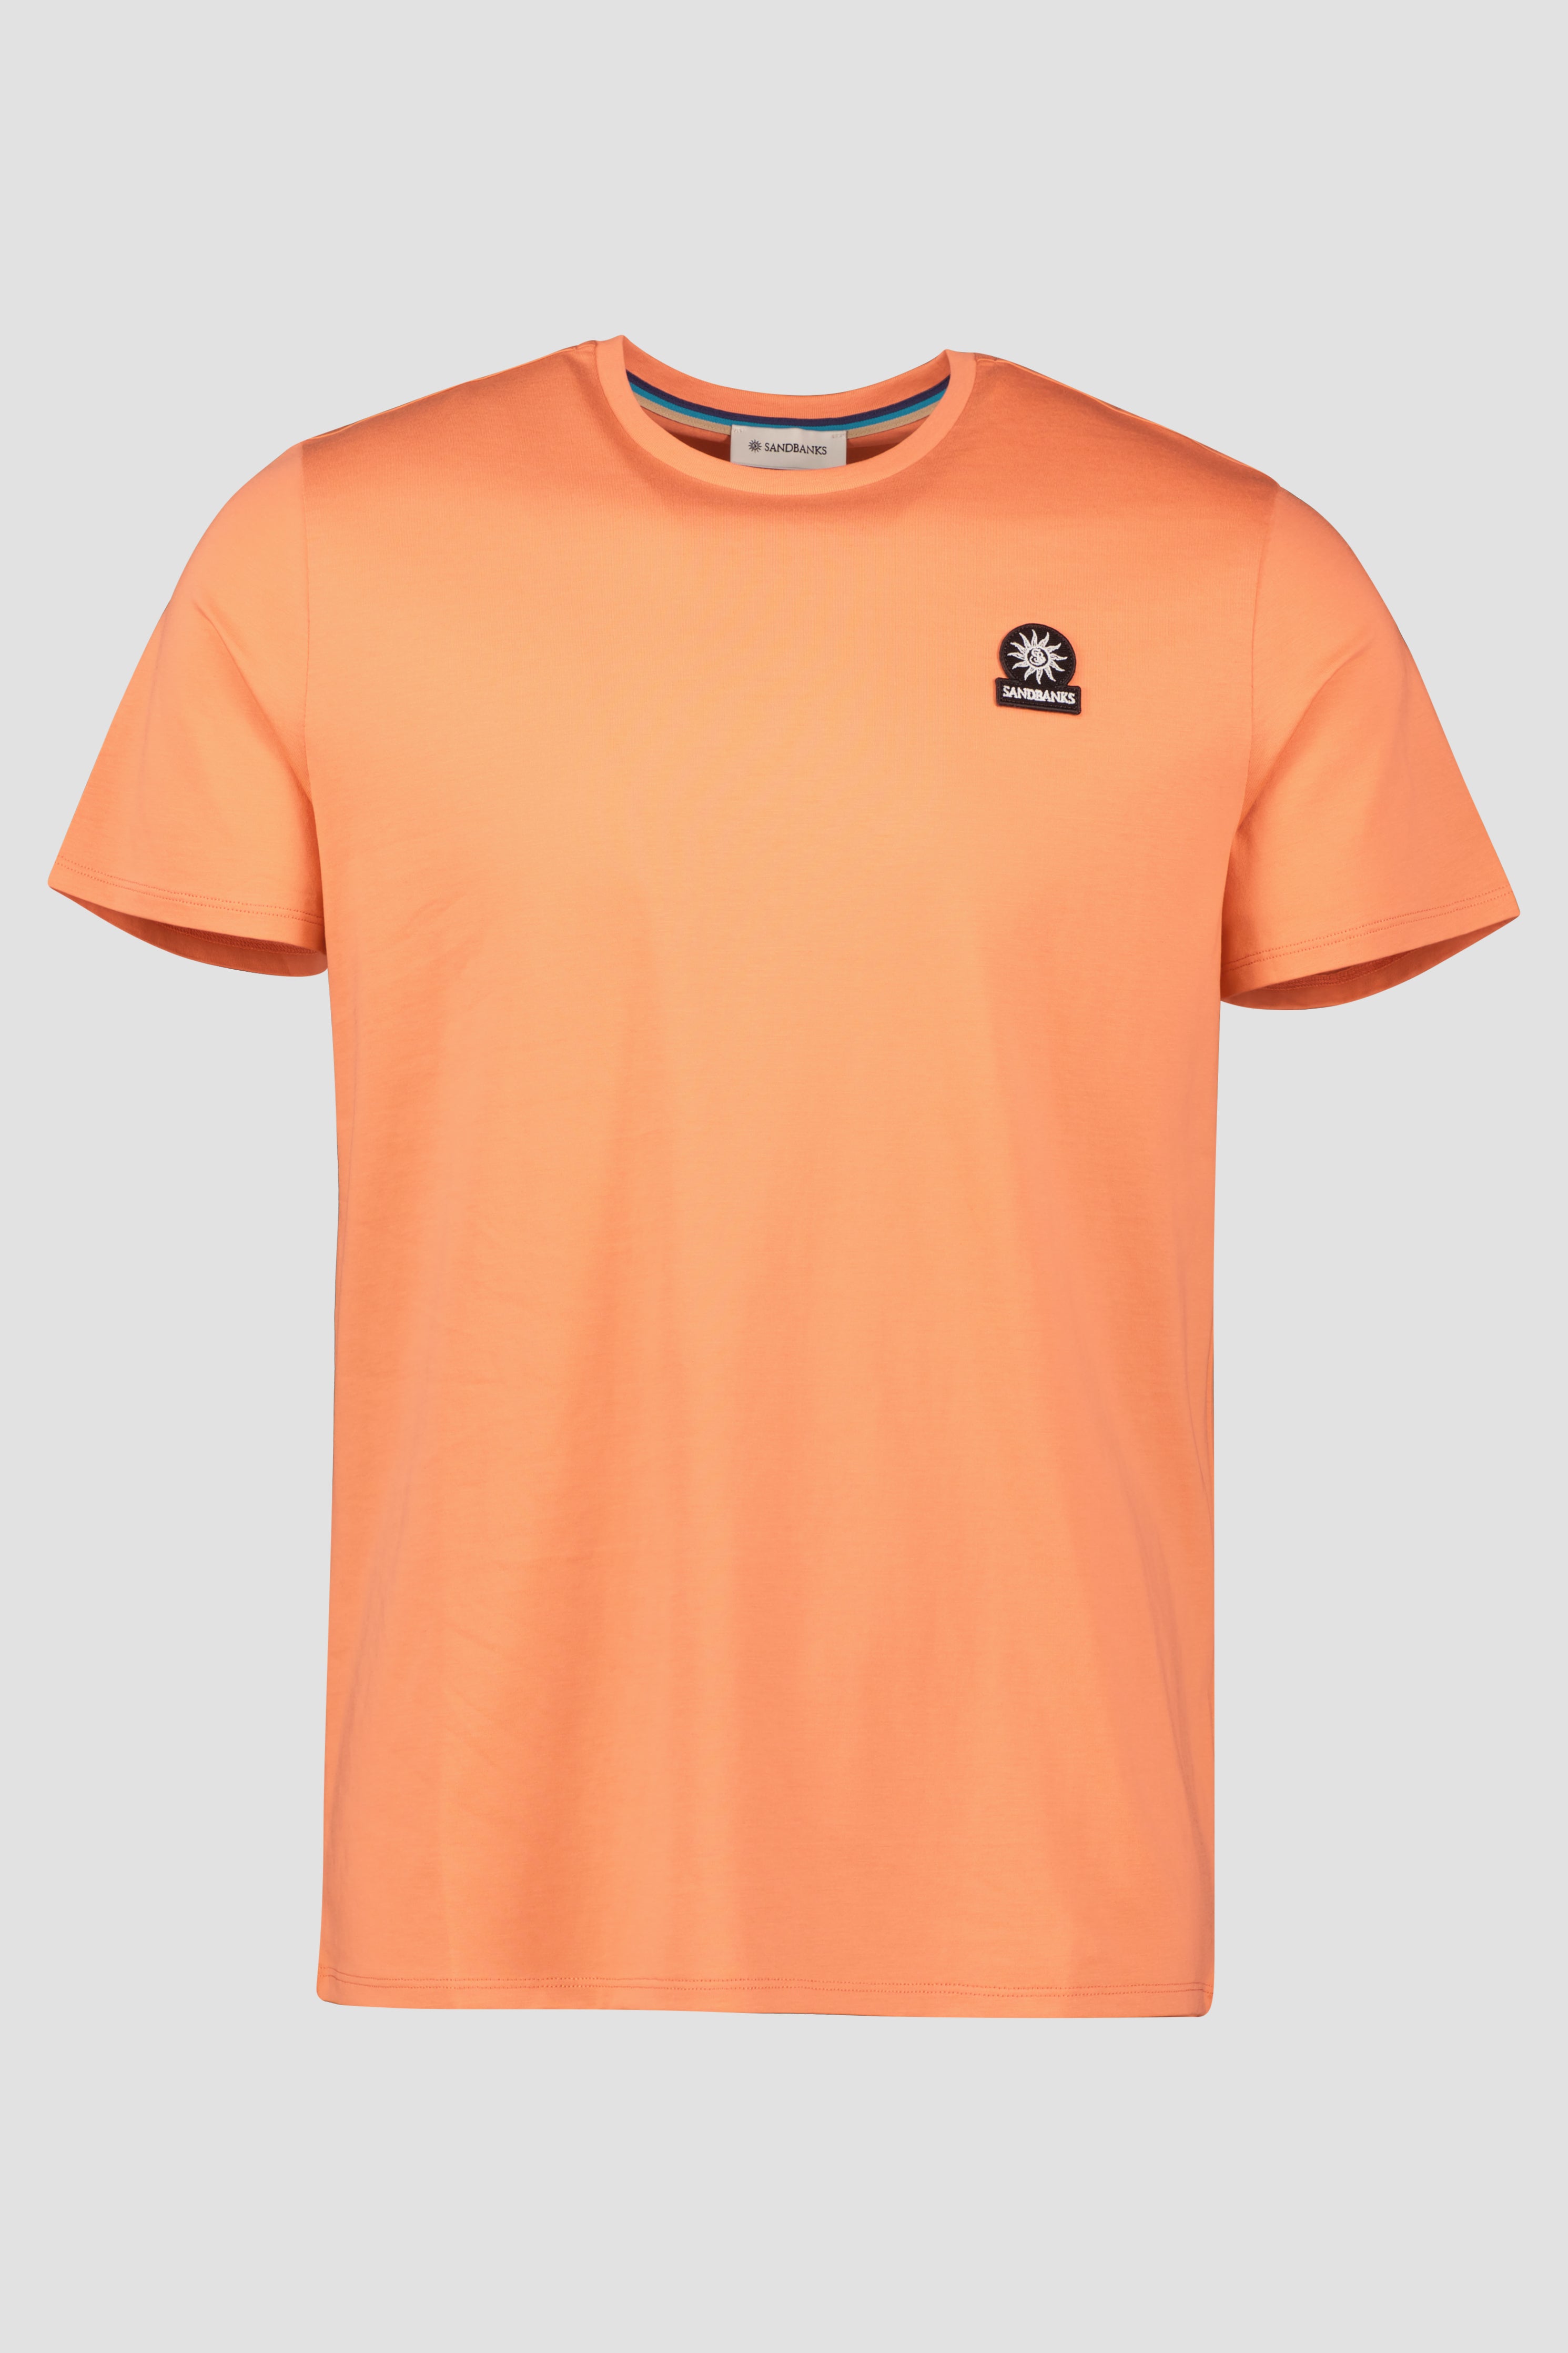 Men's Sandbanks Badge Logo Coral T Shirt